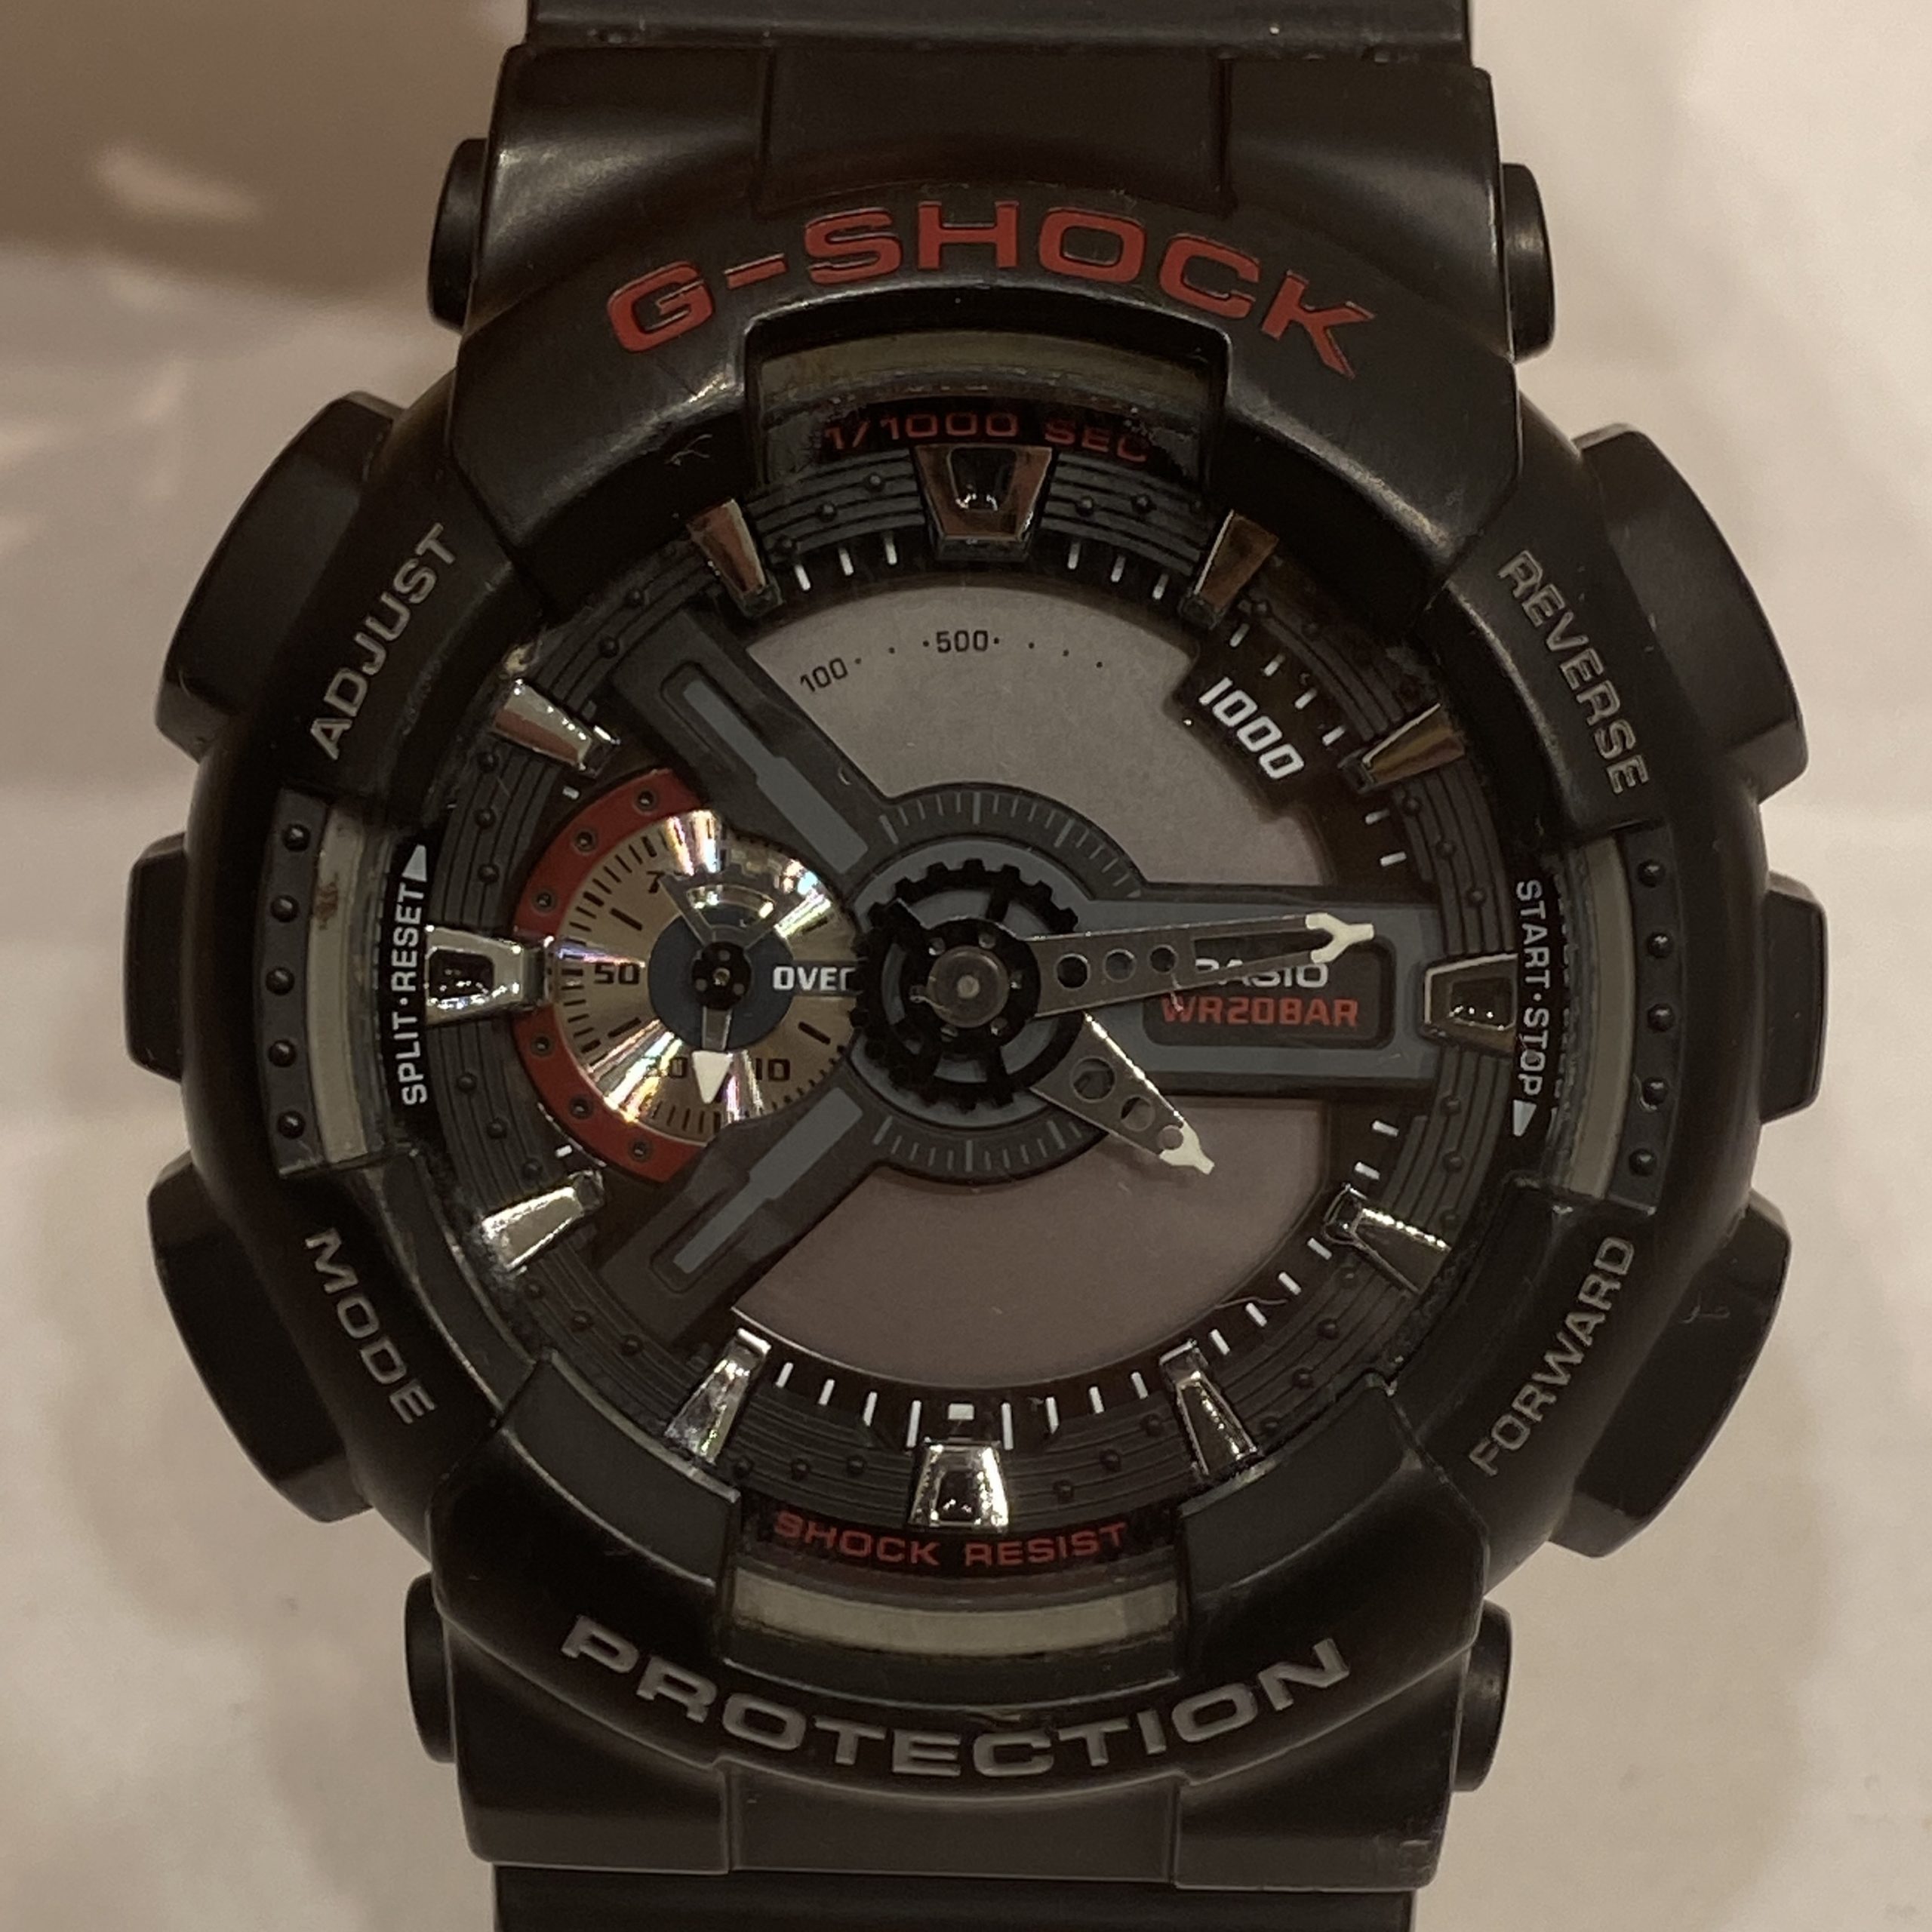 【CASIO/カシオ】G-SHOCK/ジーショック RESIST アナデジ腕時計 GA-110 ブラック